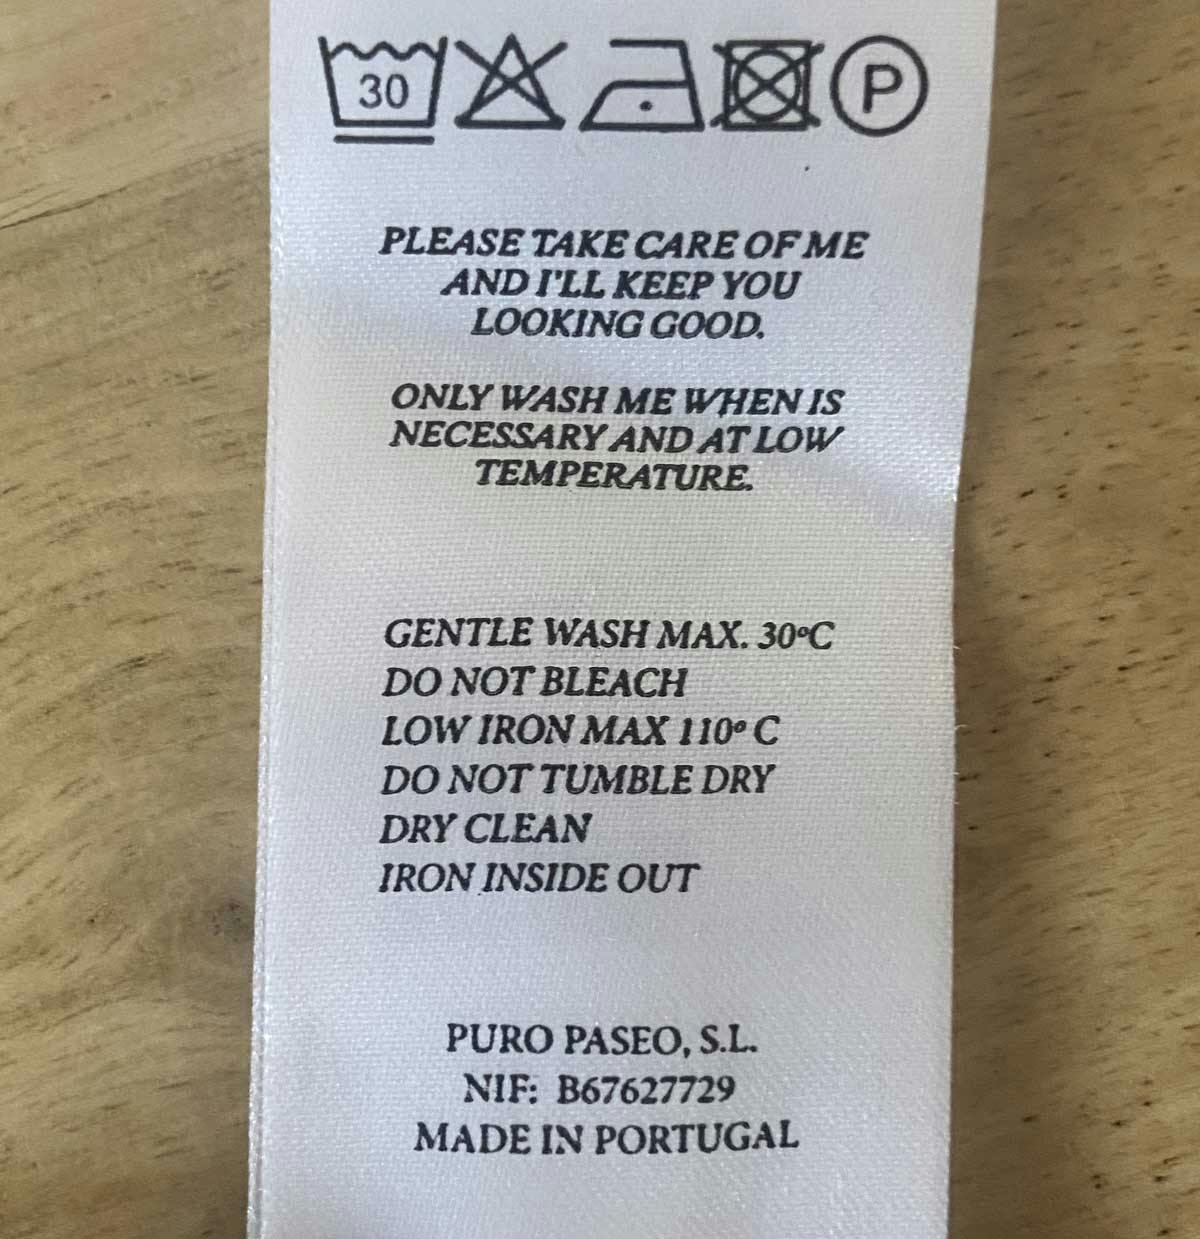  etiqueta de lavado para prenda